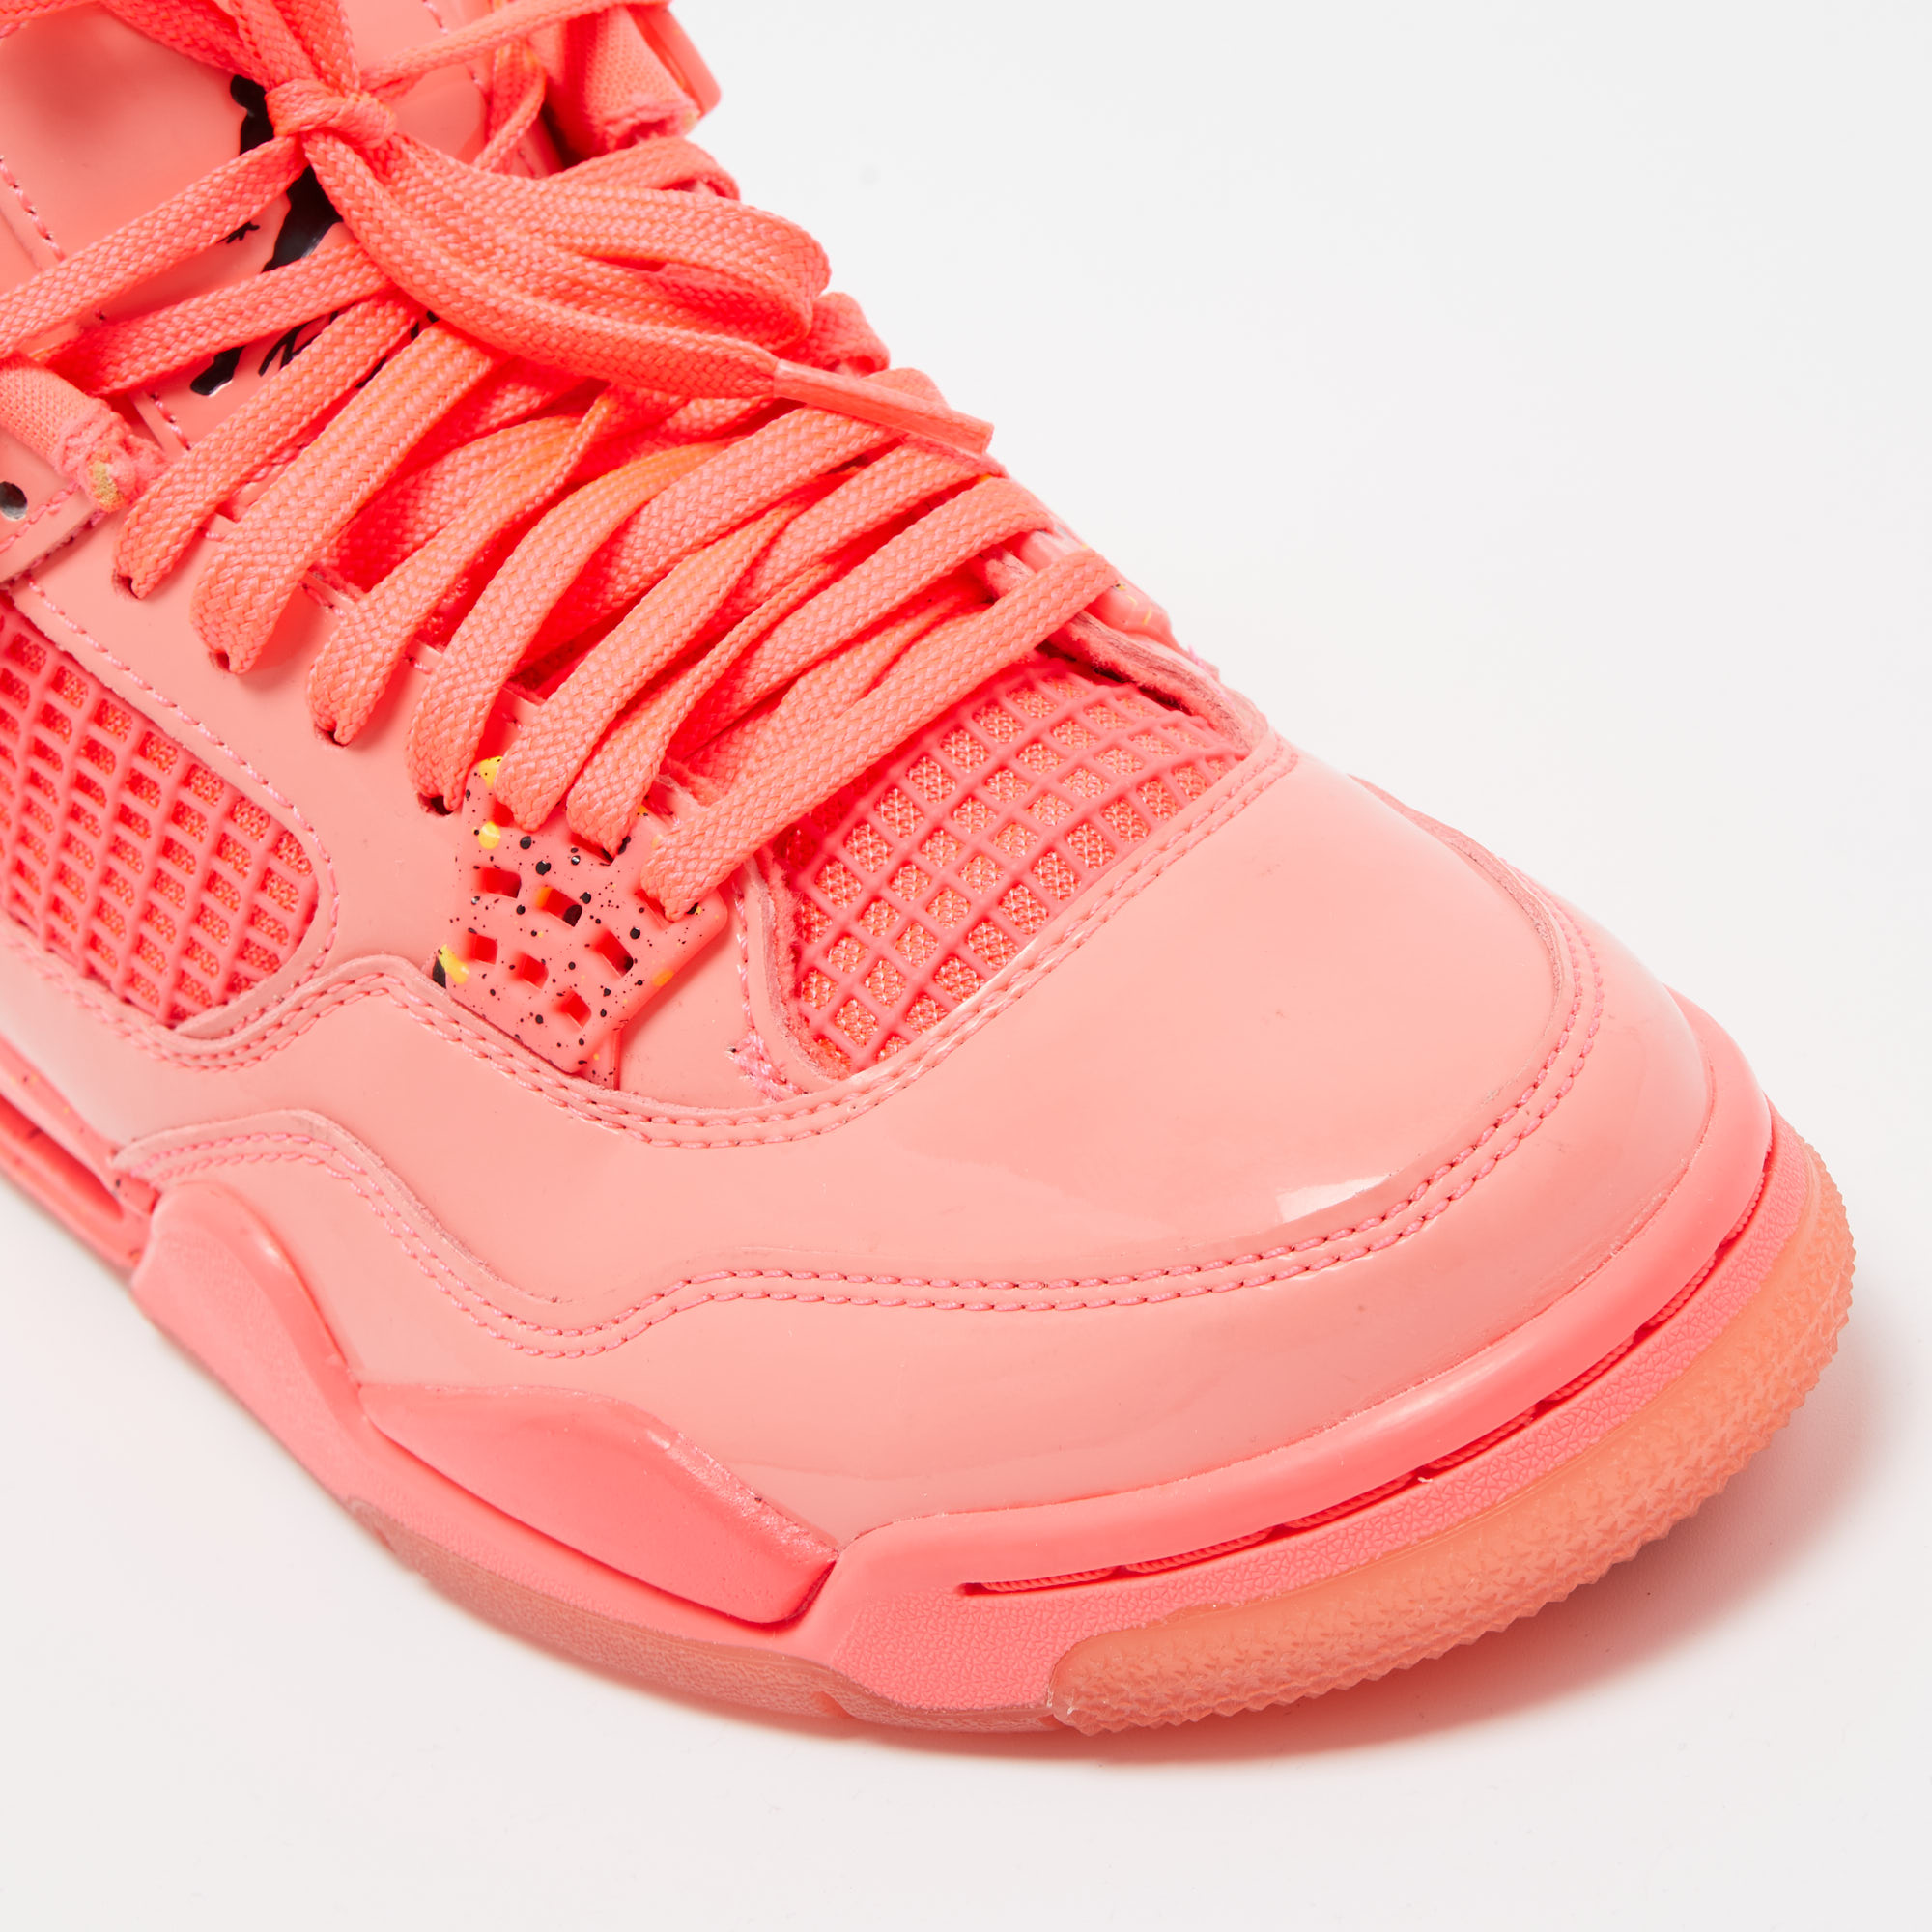 Air Jordans Neon Pink Patent Leather Jordan 4 Hot Punch Sneakers Size 36.5